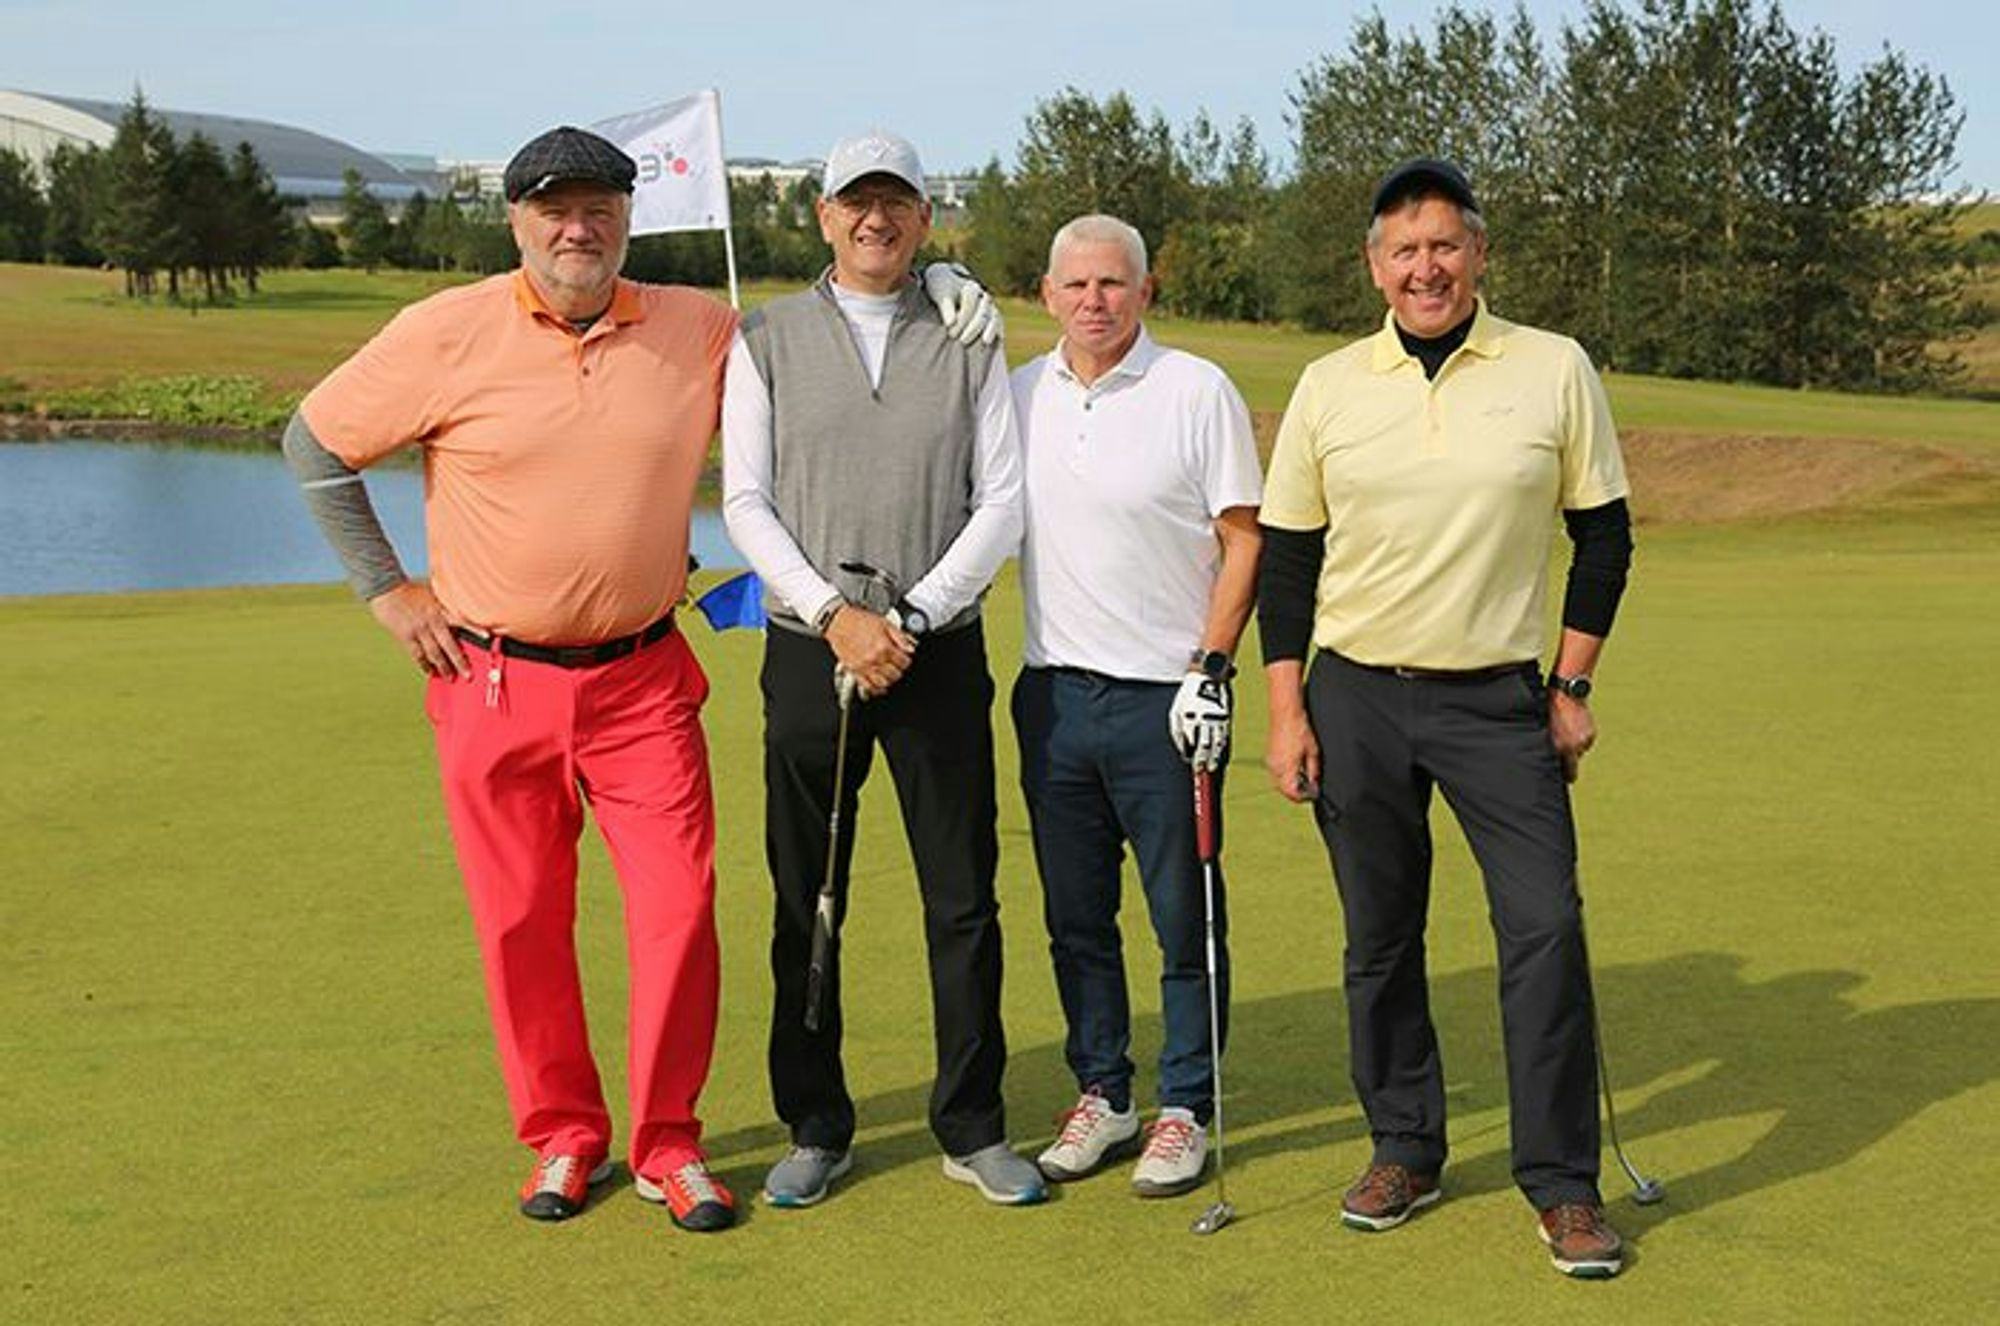 Four men posing on a golf course